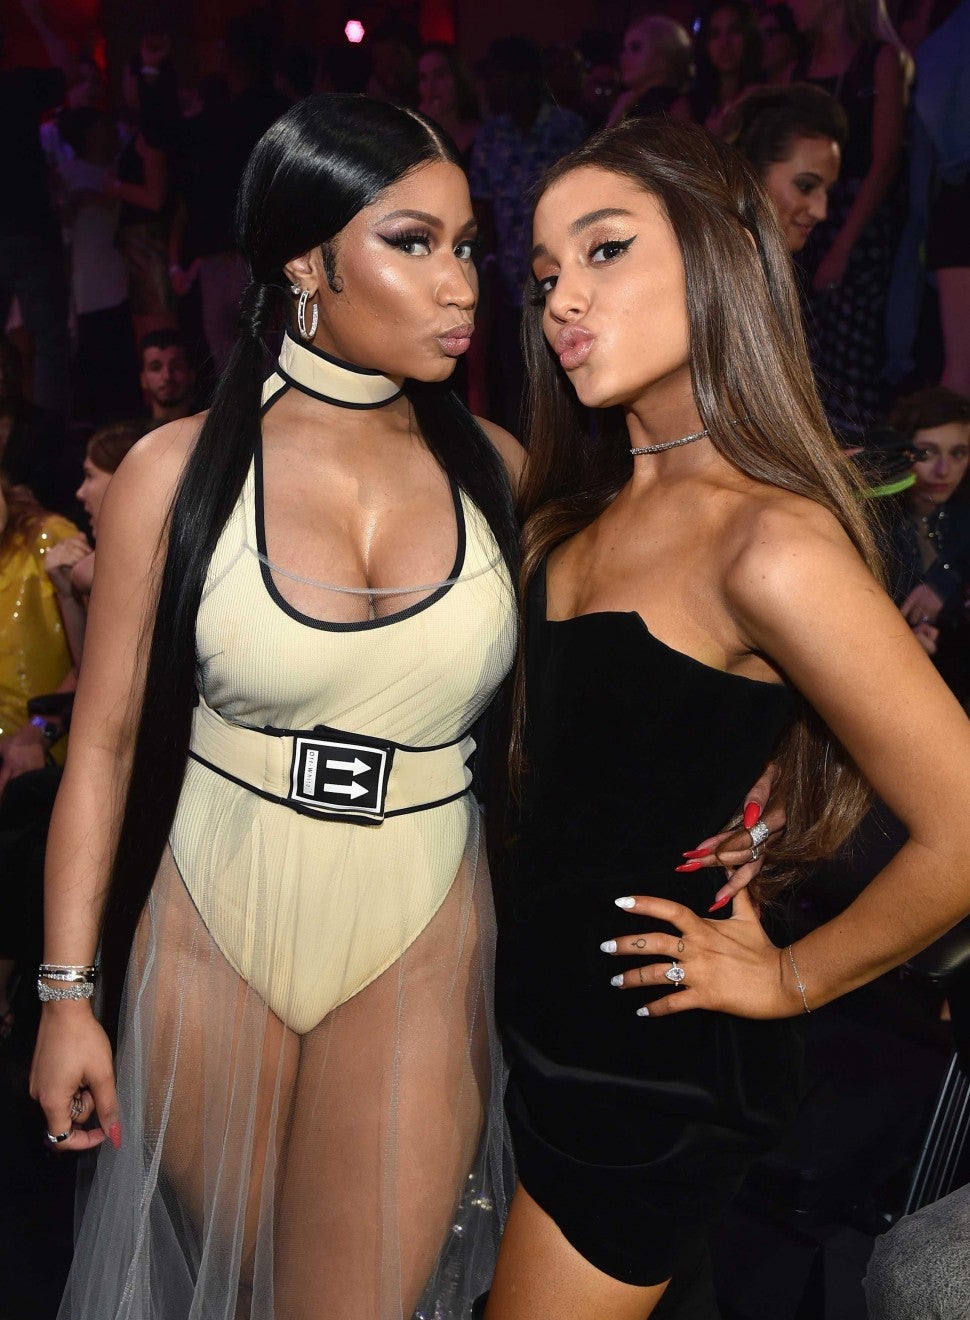 Nicki Minaj and Ariana Grande at the MTV VMAs in New York City on Aug. 20